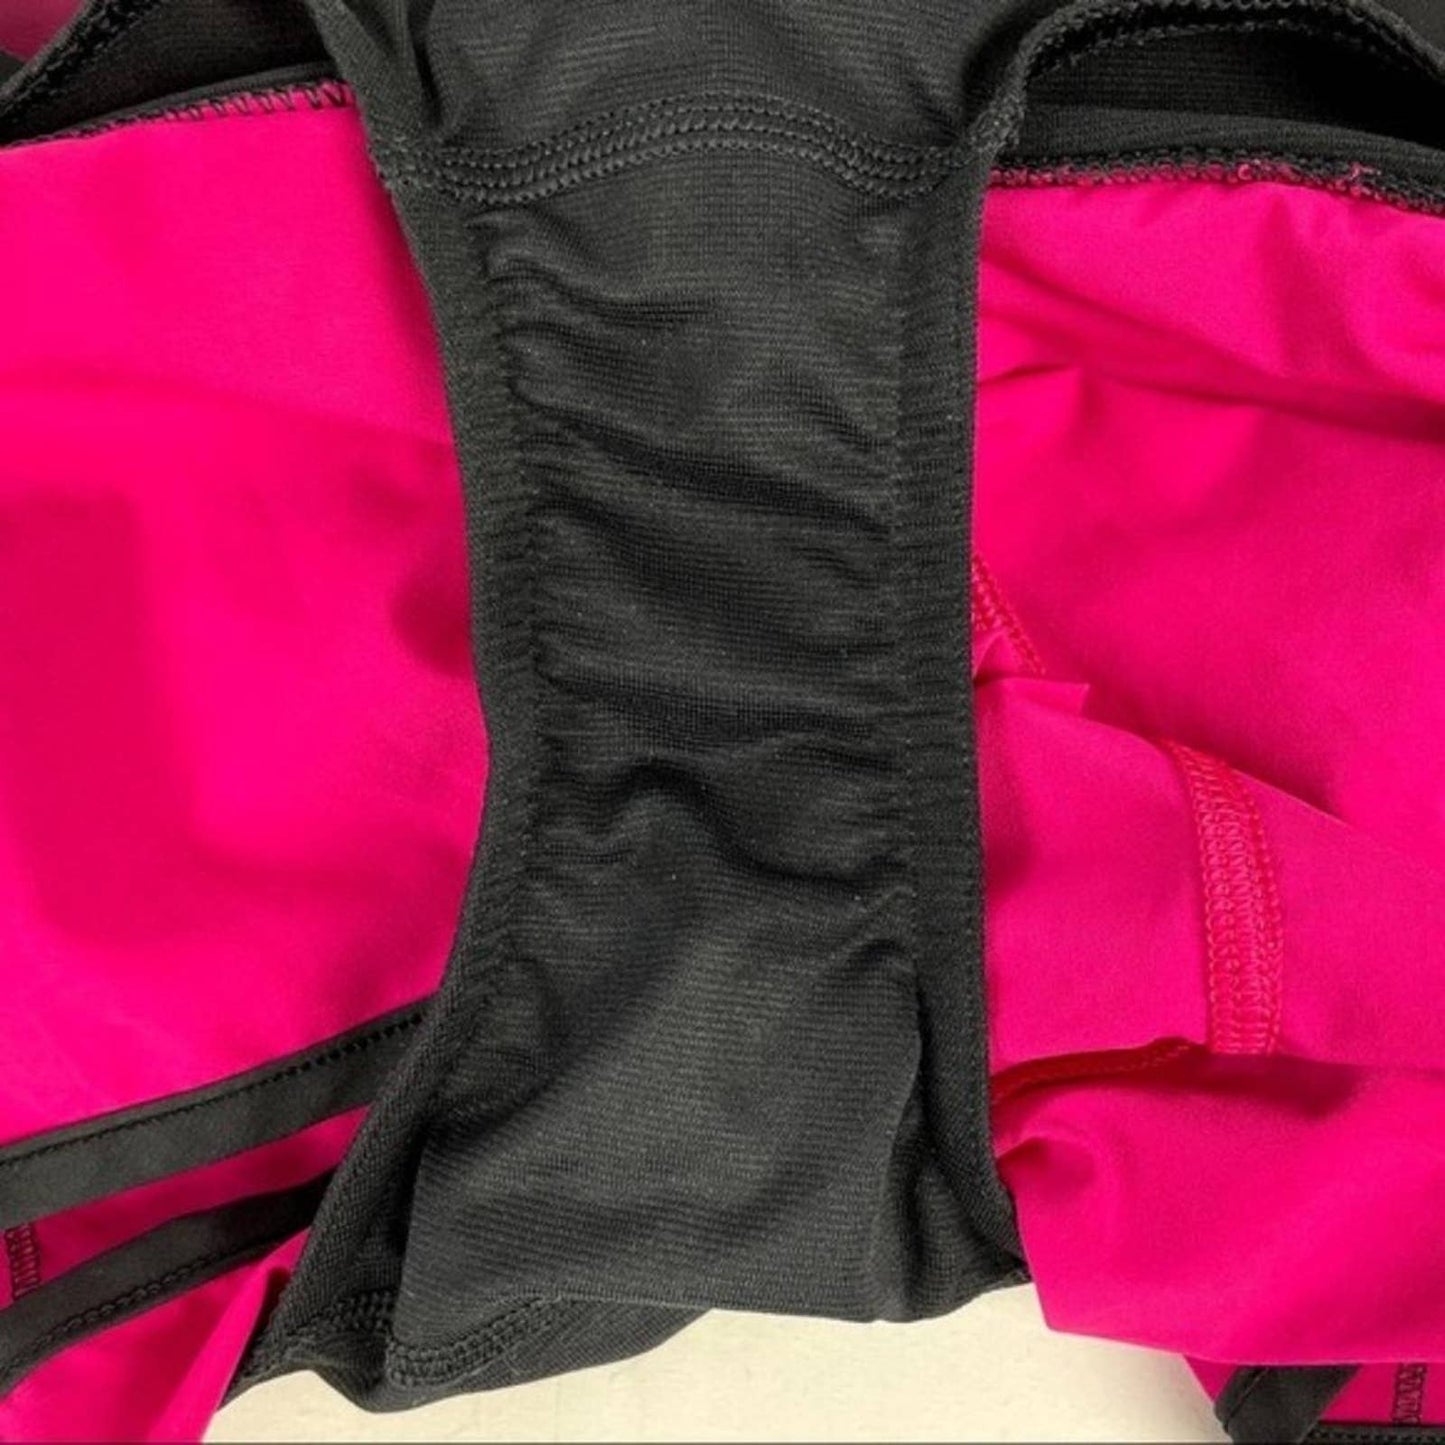 Lululemon Speed Short Jewelled Magenta Bright Pink Running Athletic Activewear Size 6